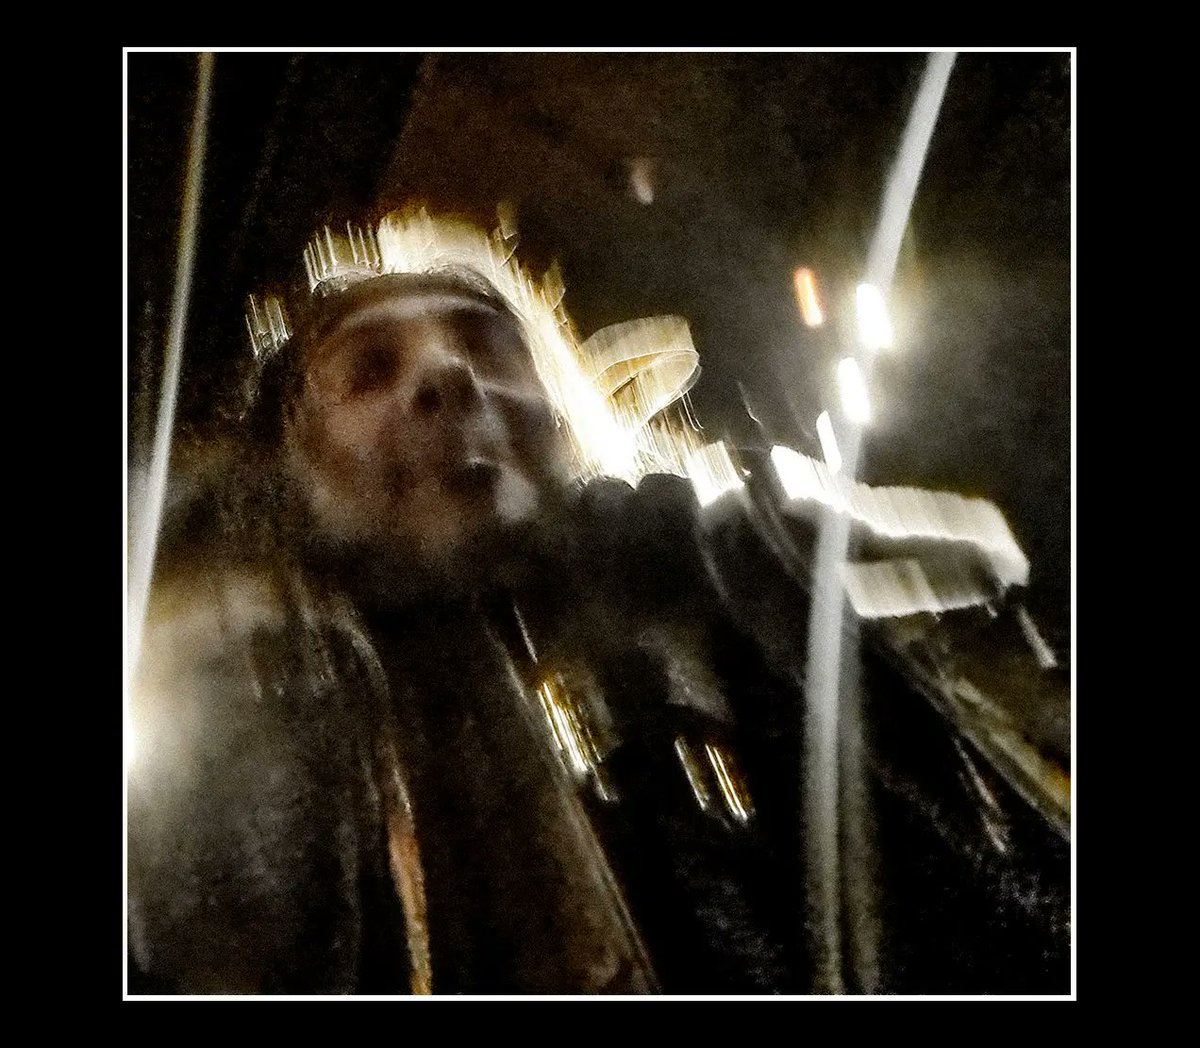 Friends & Beers & Gigs
.
#selfie #selfportrait #autoportrait #derision #fck #masshysteria #mh #tenace #metal #metalband #photolive #gig #concert #friends #nightshot #denatelier #luxembourg #friends #beer #drunk #noiretblanc #monochrome #bnw #bnwphoto #bnwphotography #blacknwhite